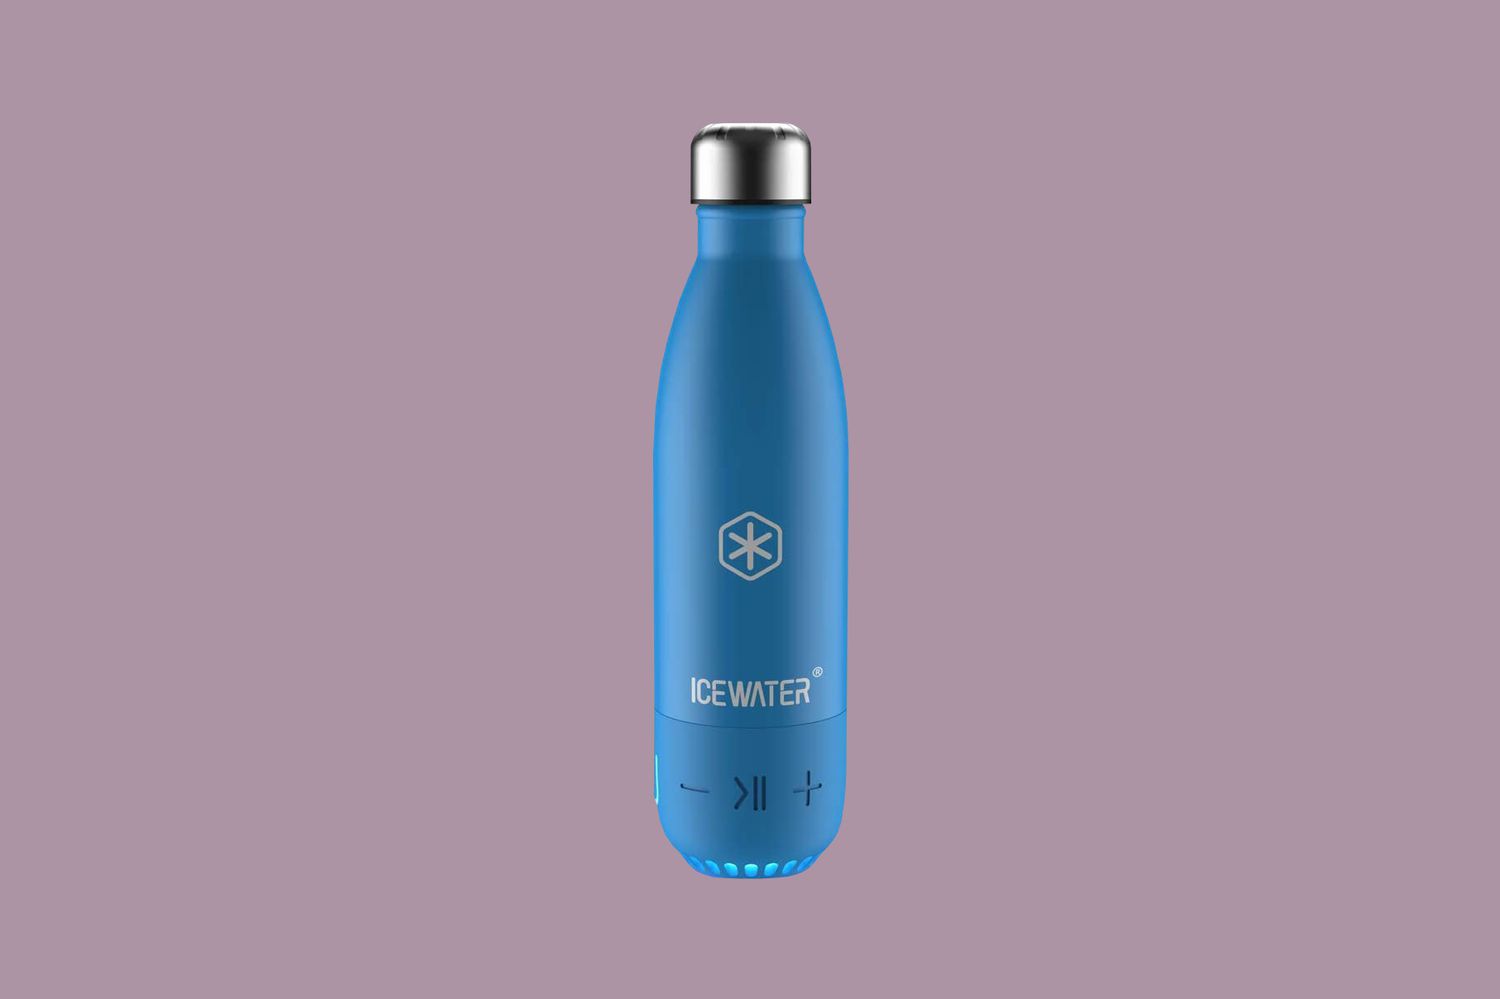 Icewater 3-in-1 Smart Water Bottle